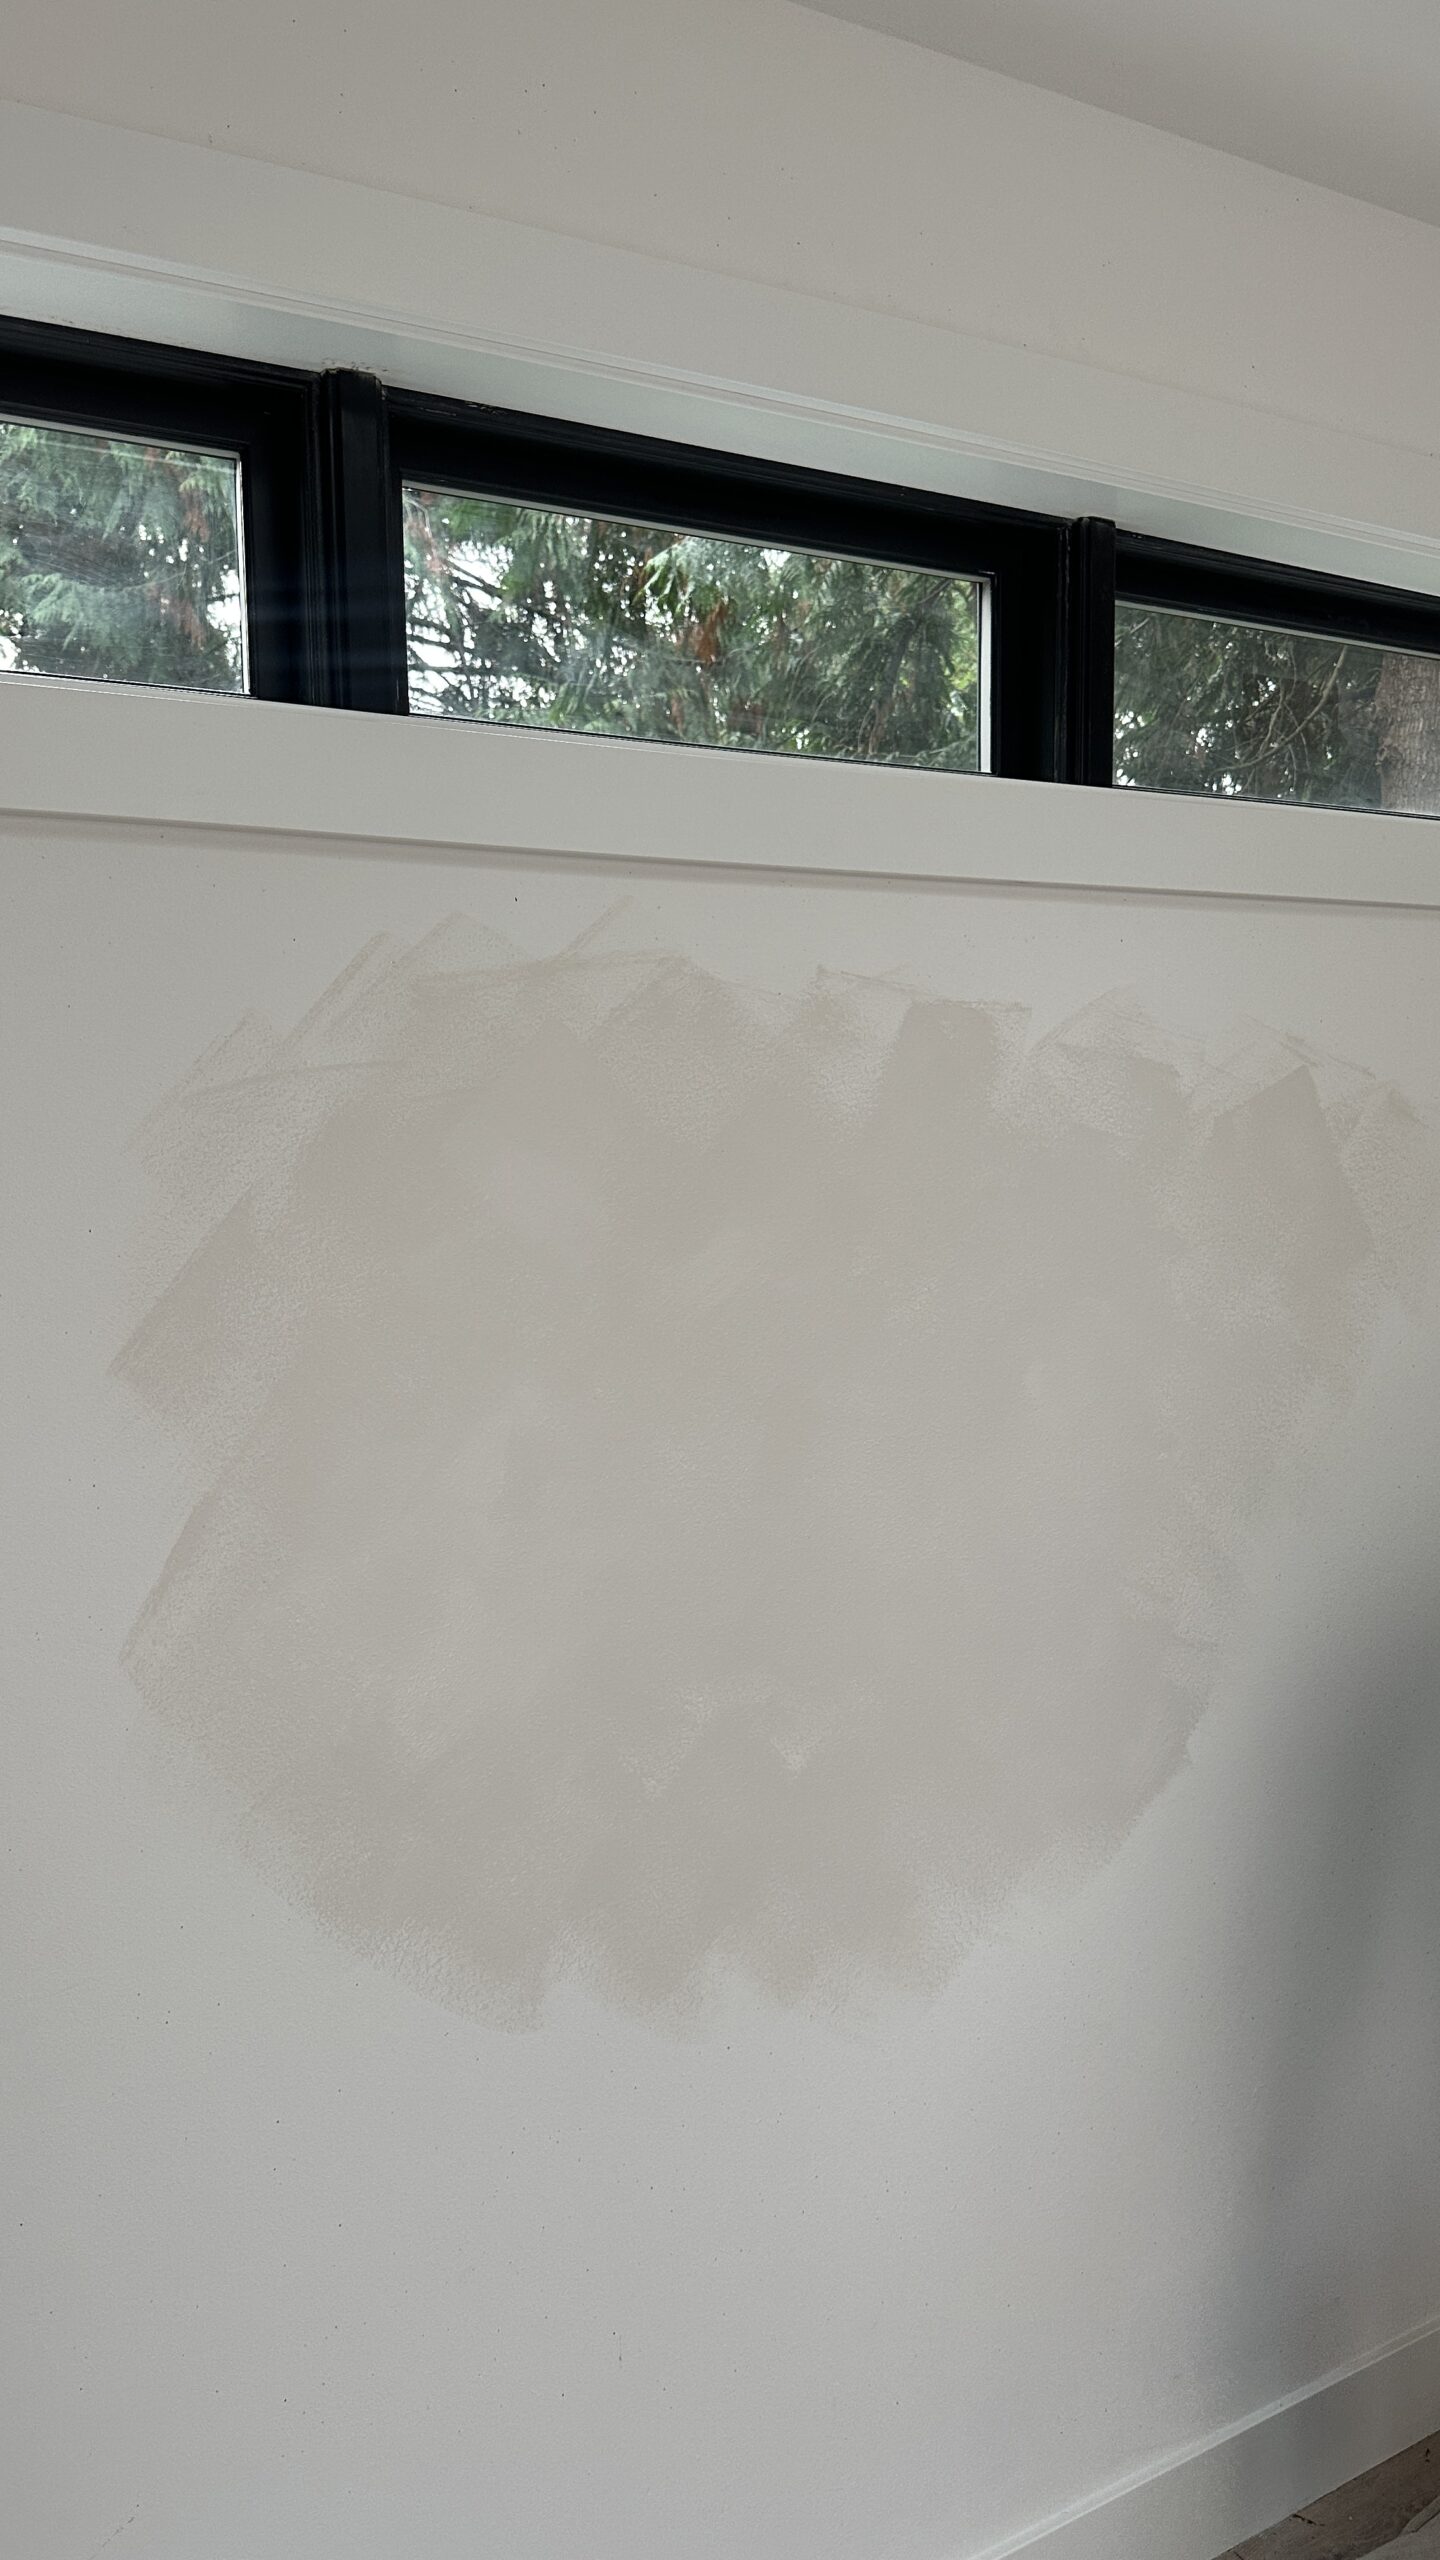 DIY Faux Limewash Effect with Glidden Diamond Paint - The Home Depot x Sabrina Tan - 11